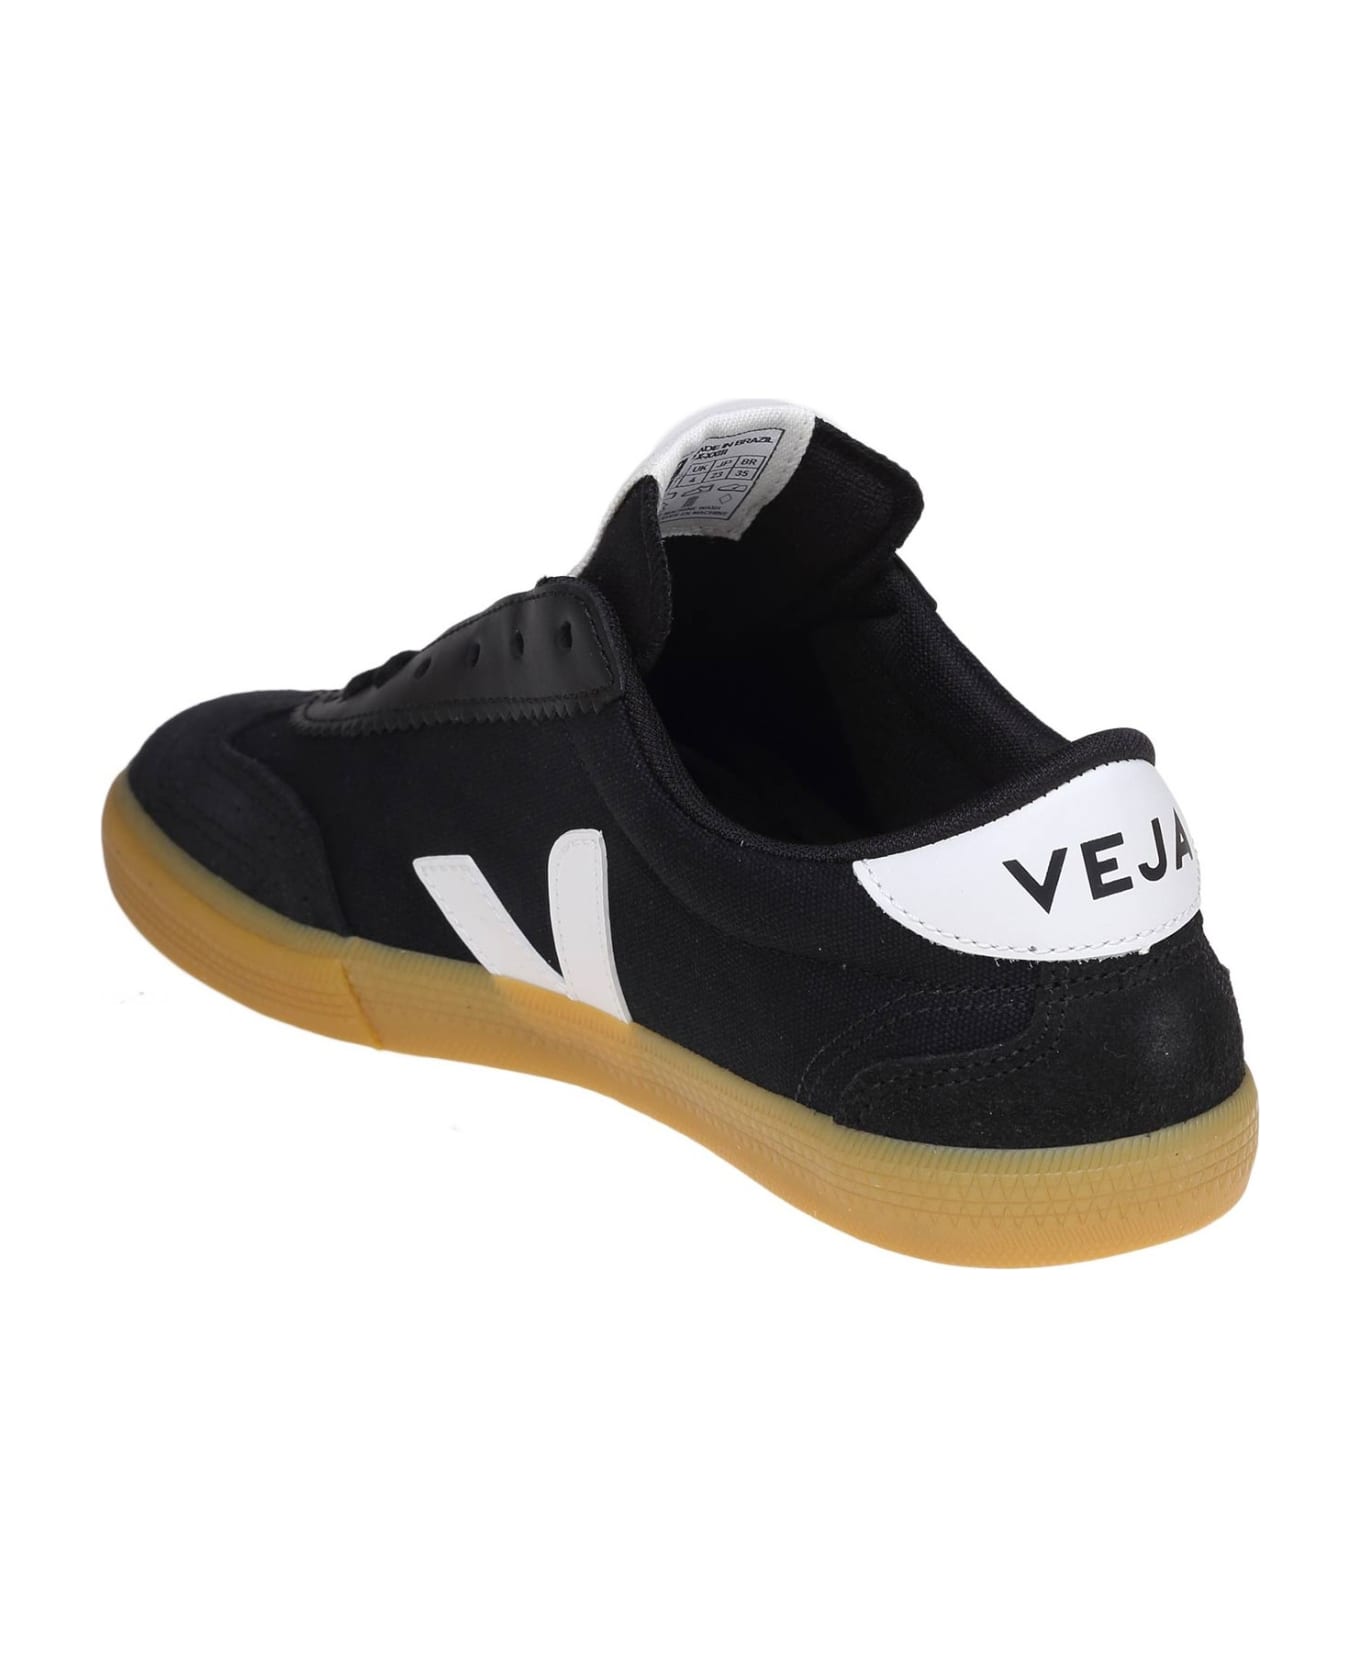 Veja Volley Sneakers In Black Canvas - Black/White